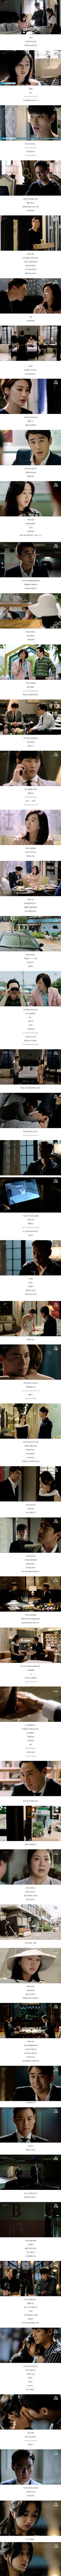 episode 7 captures for the Korean drama 'Mask'